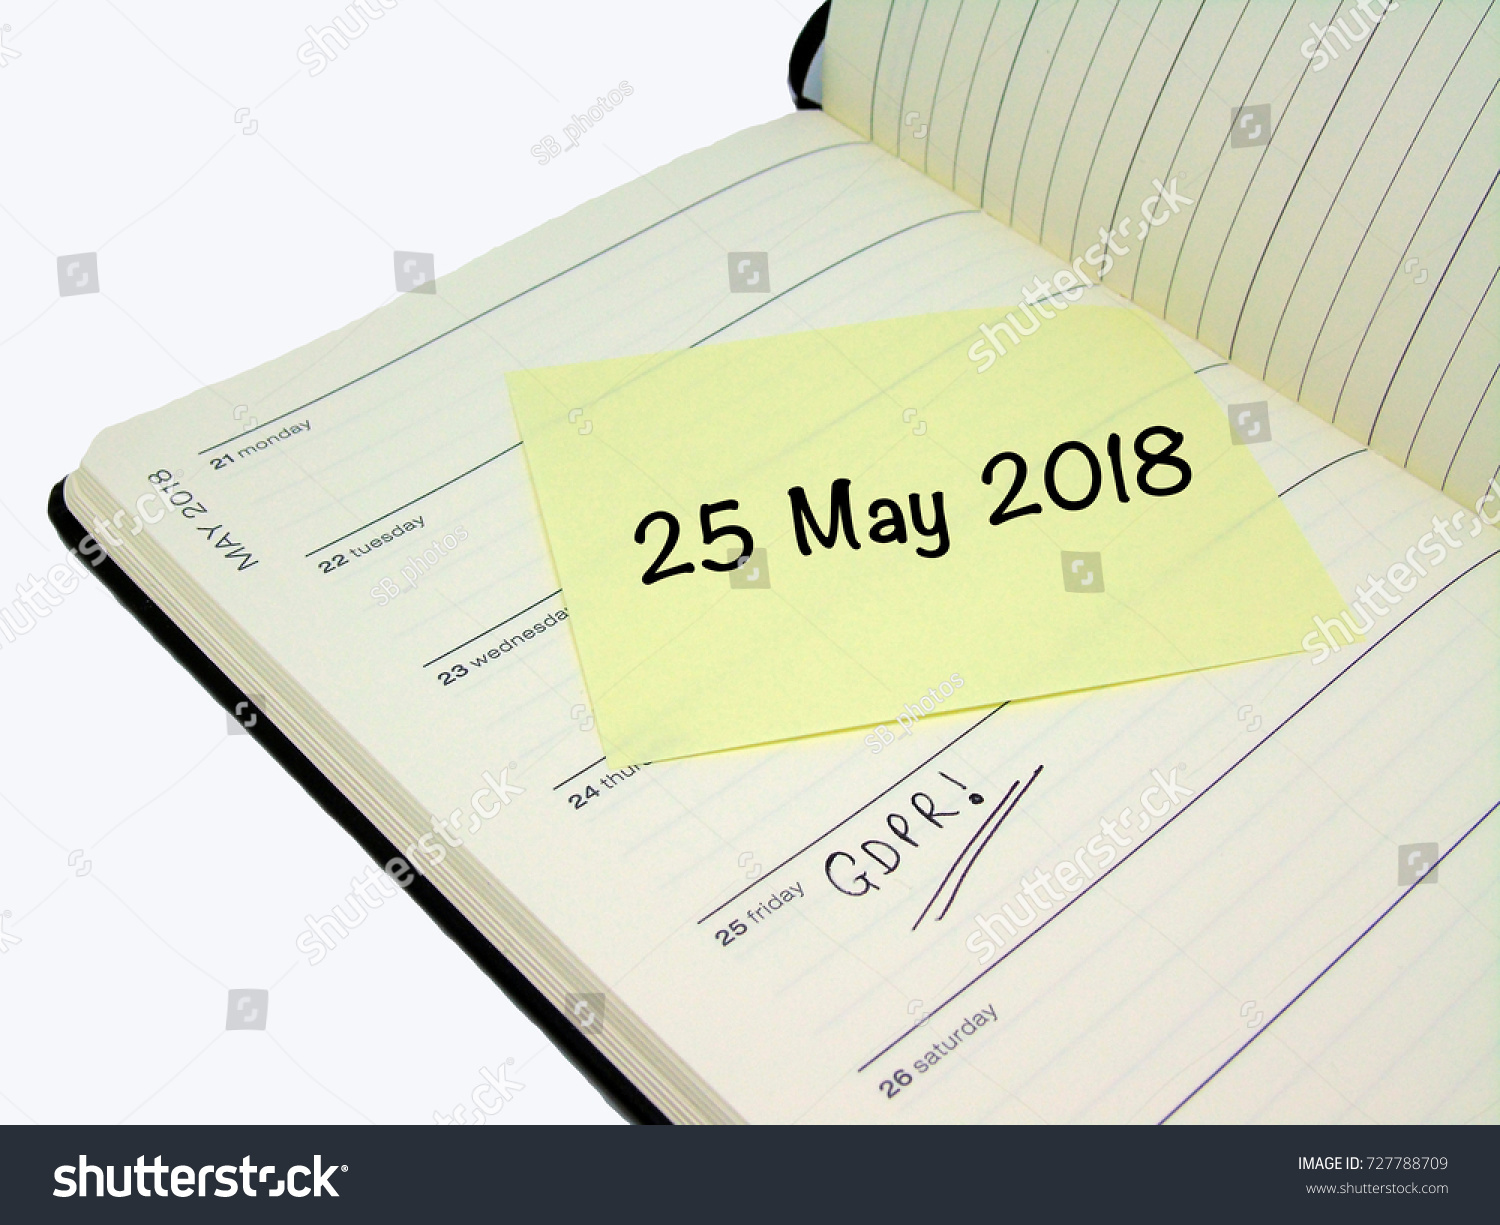 General Data Protection Regulation (GDPR) - 25 May 2018 #727788709